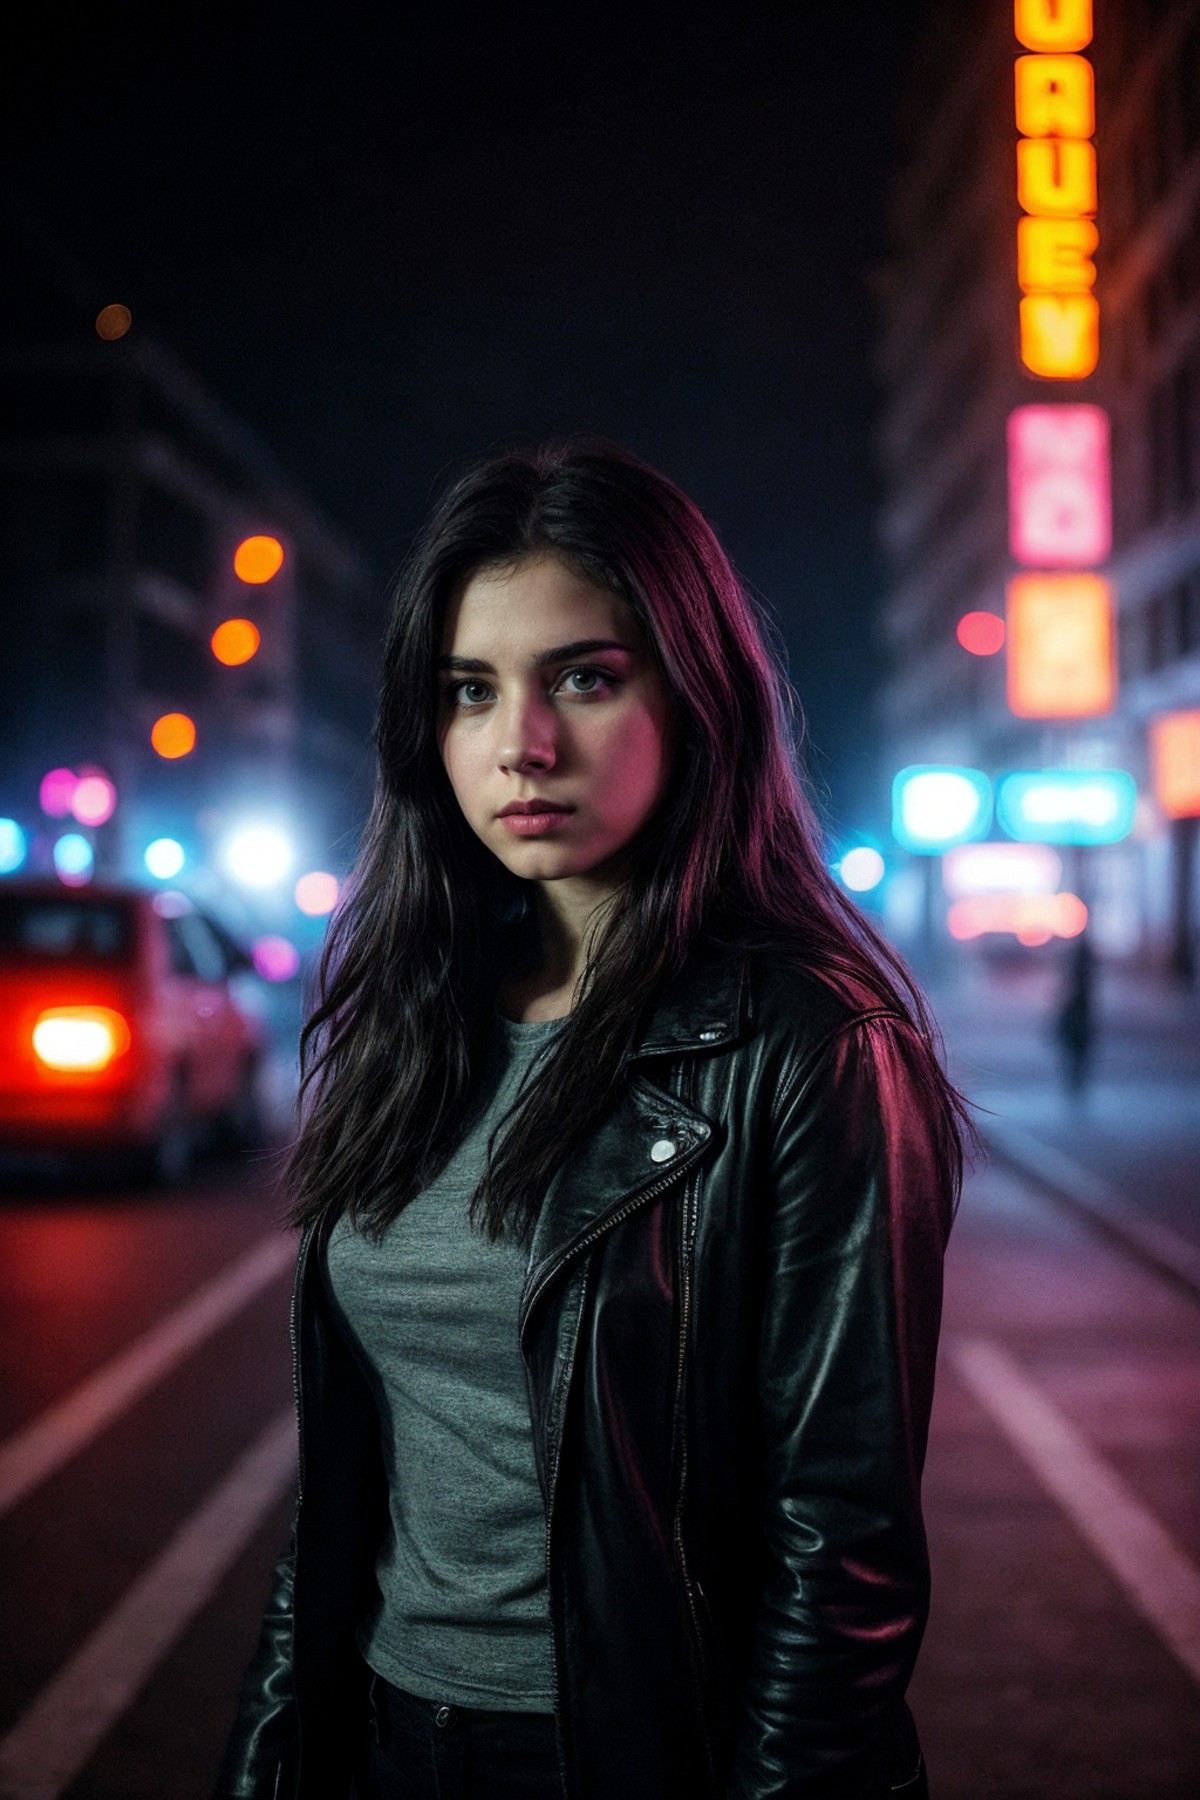 city street, neon, fog, volumetric, closeup portrait photo of young woman in dark clothes